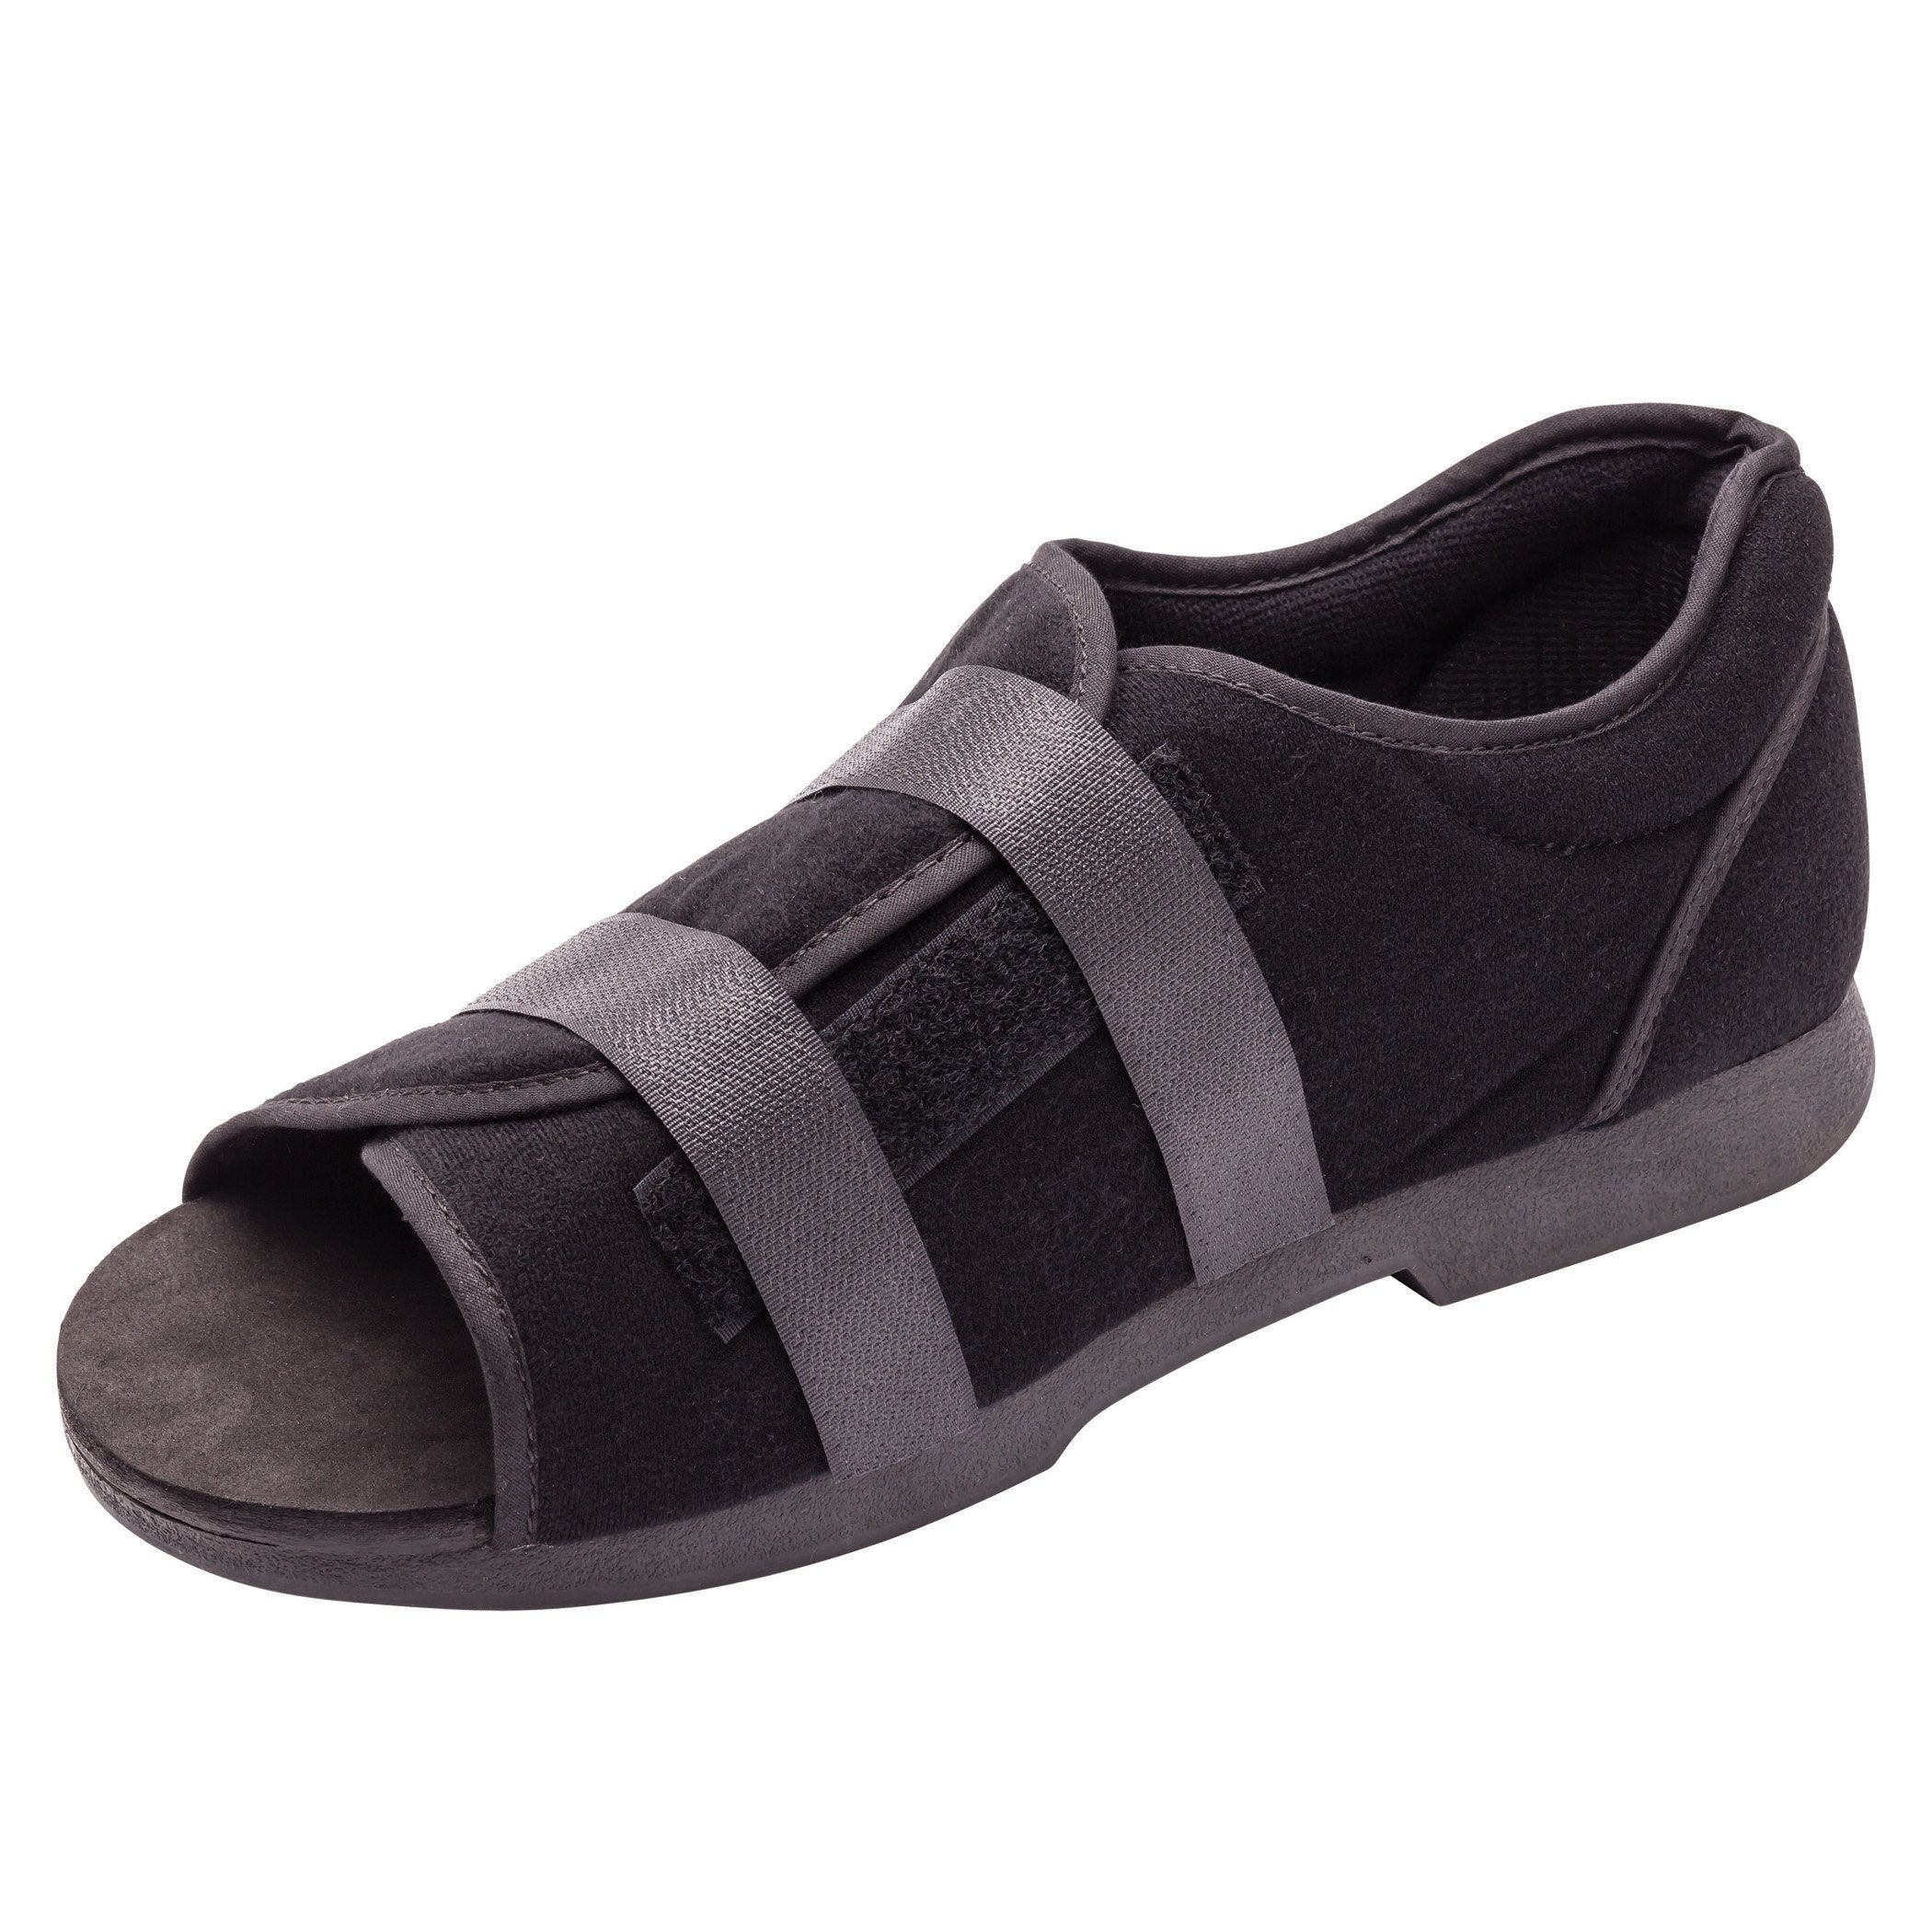 Soft Top Post-Op Shoe Össur® X-Large Adult Black